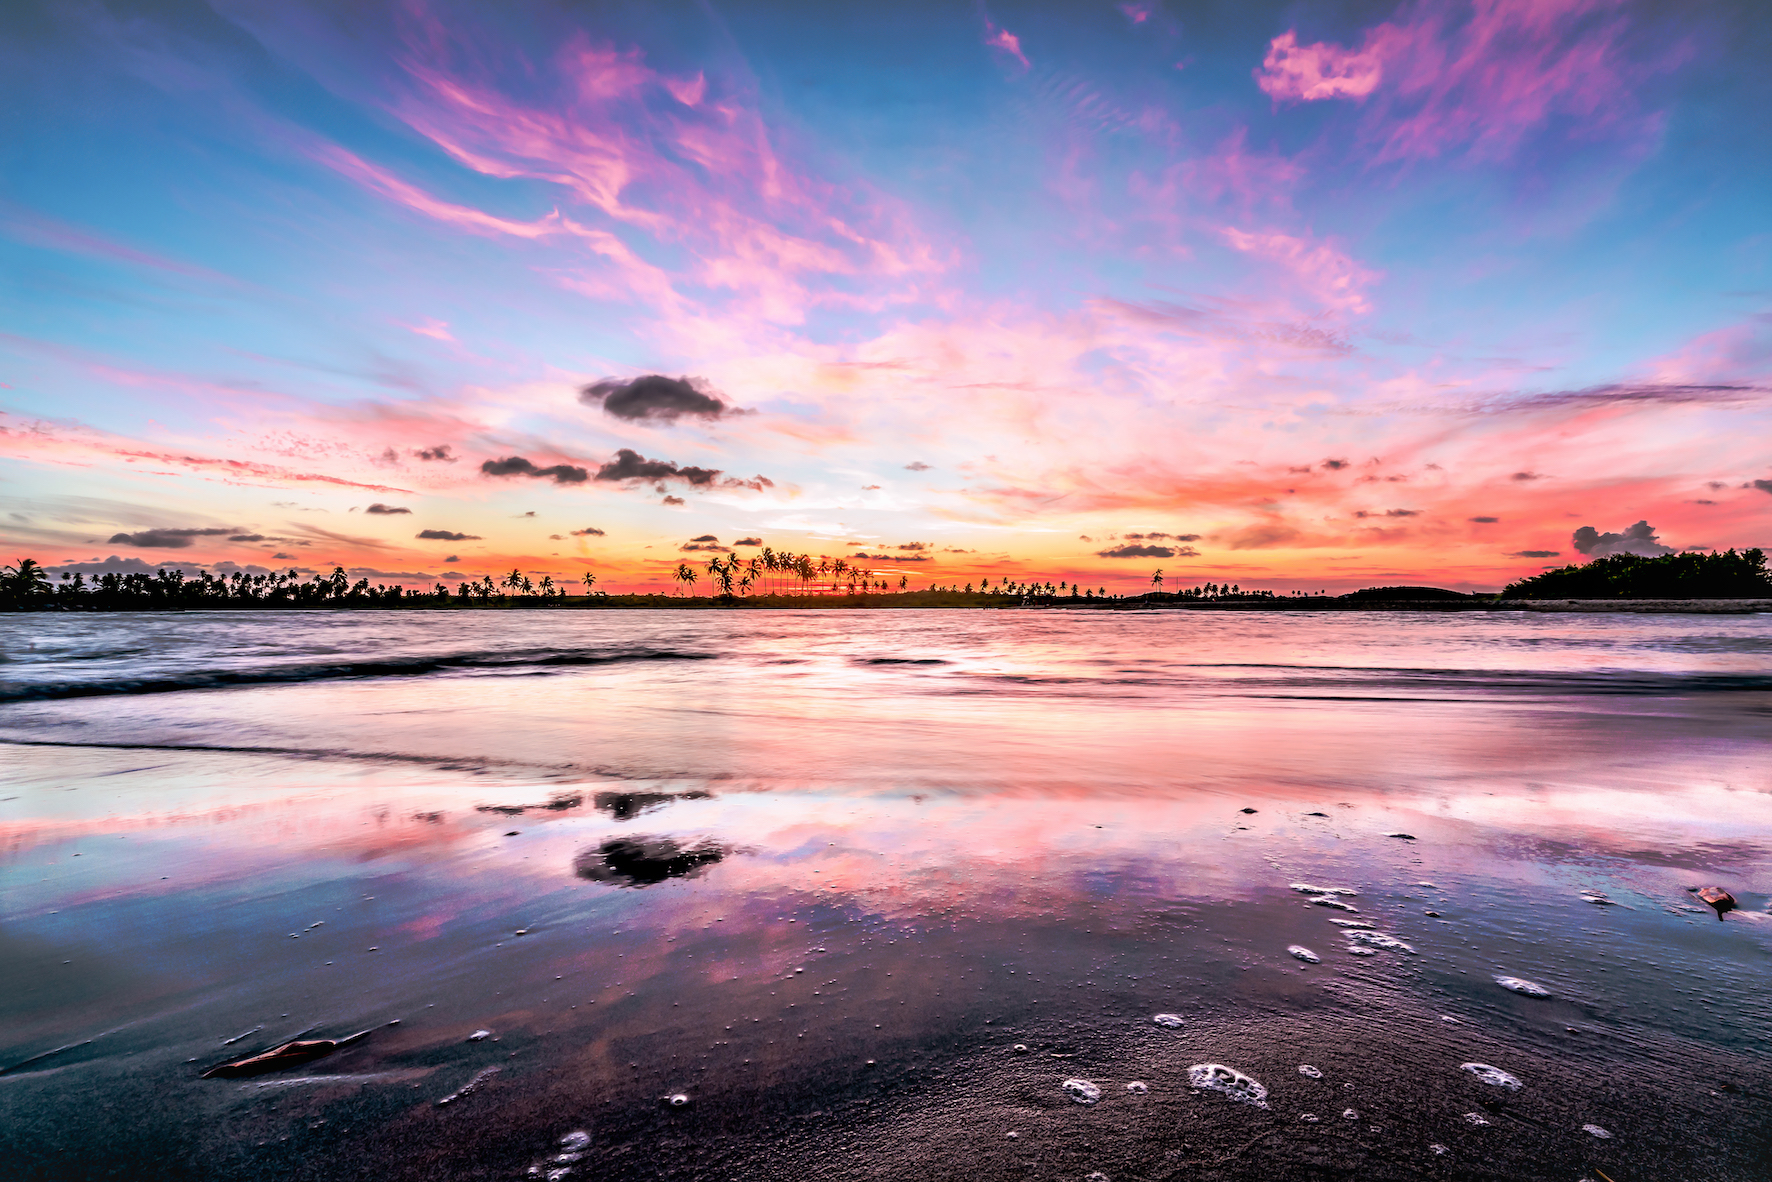 Maracaipe beach, Pernambuco, Brazil. Sony A7RII Camera, FE 16-35mm F4 Sony Zeiss lens.